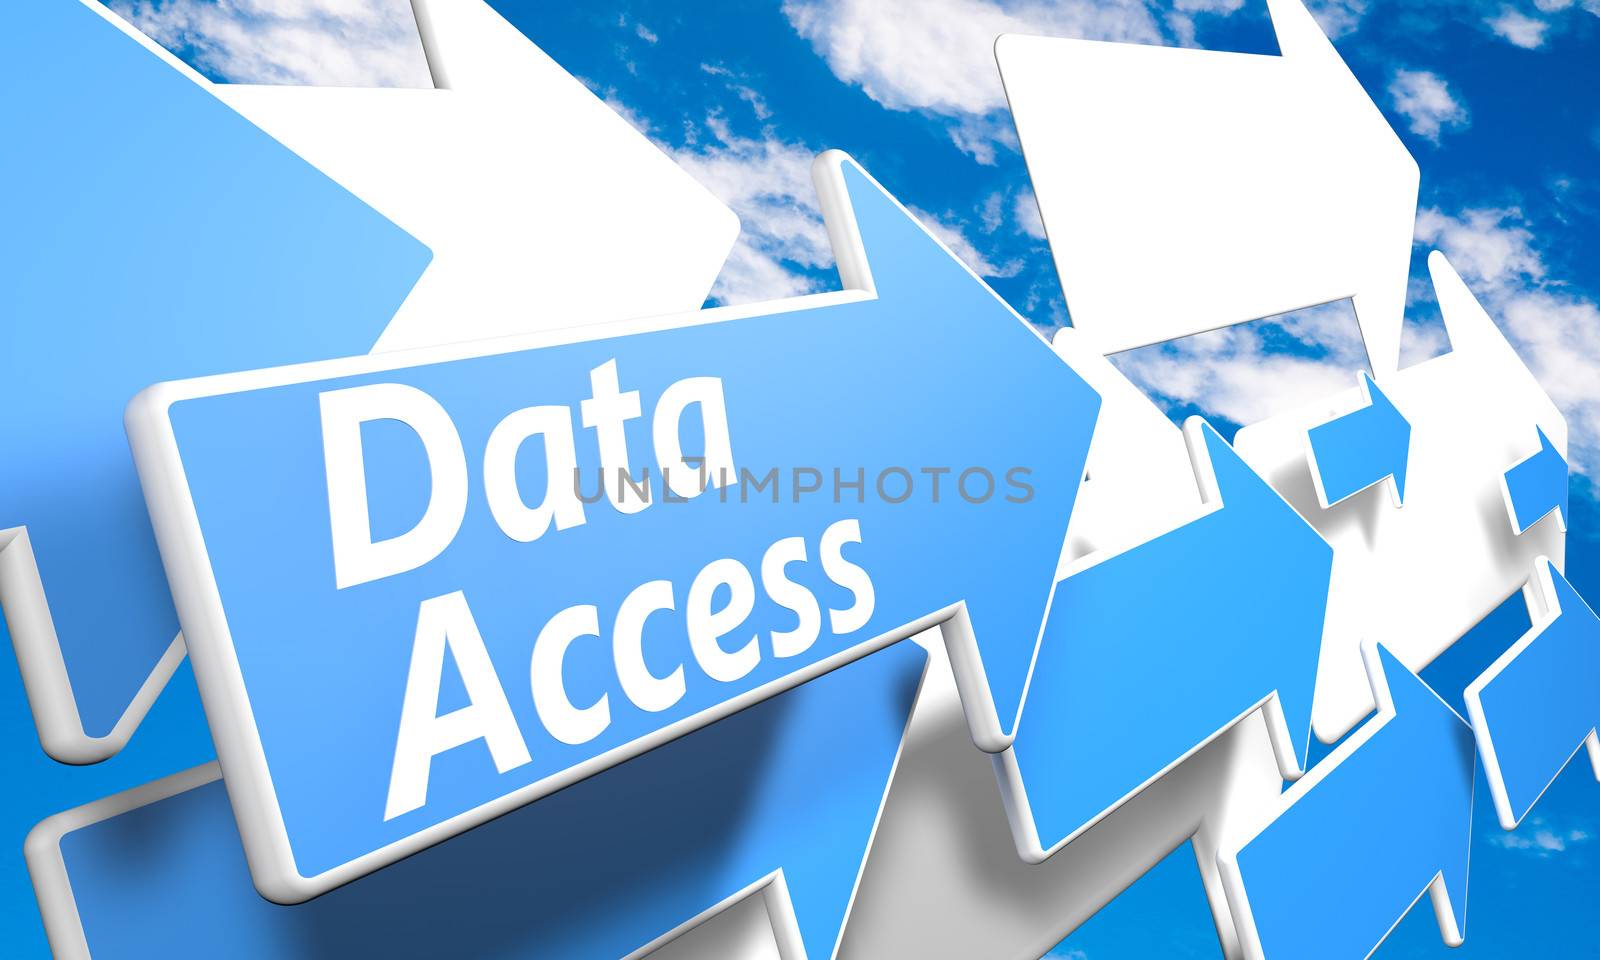 Data Access by Mazirama